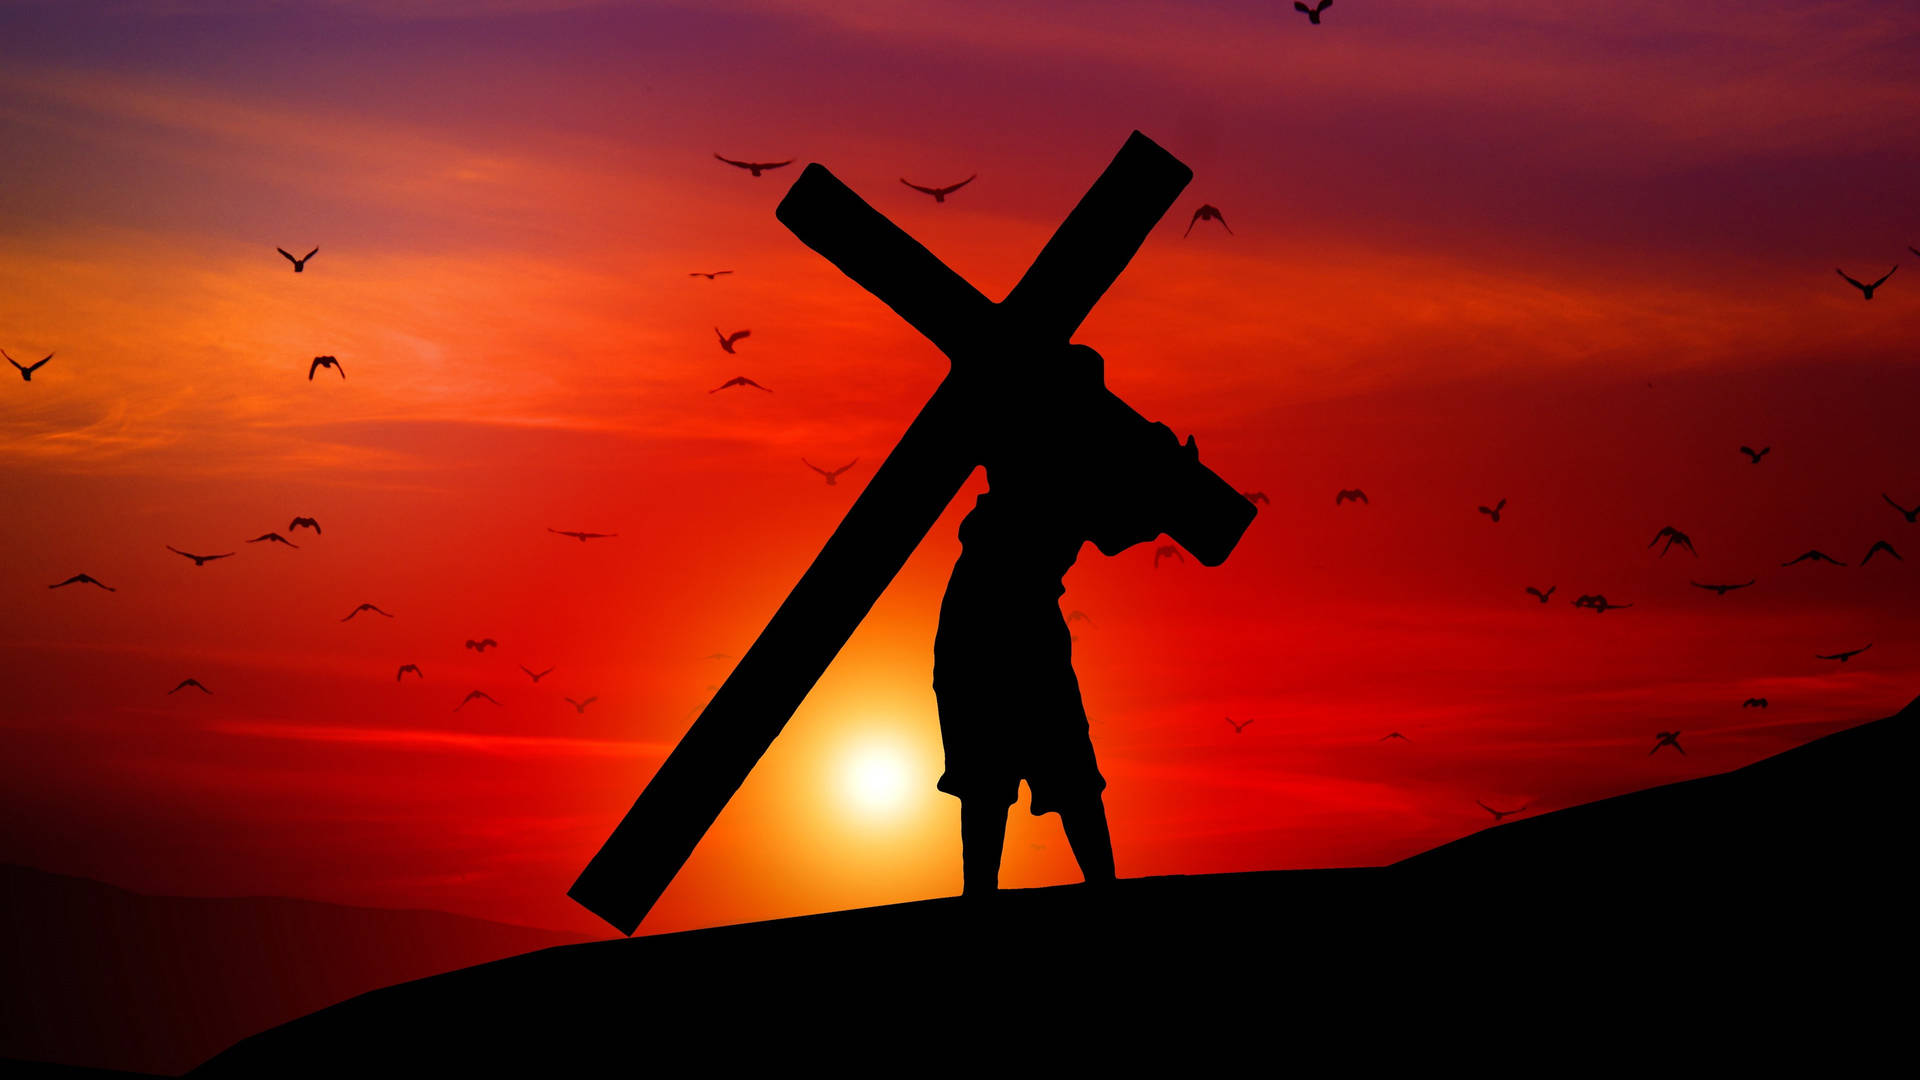 Jesus Christ Carrying A Cross Wallpaper